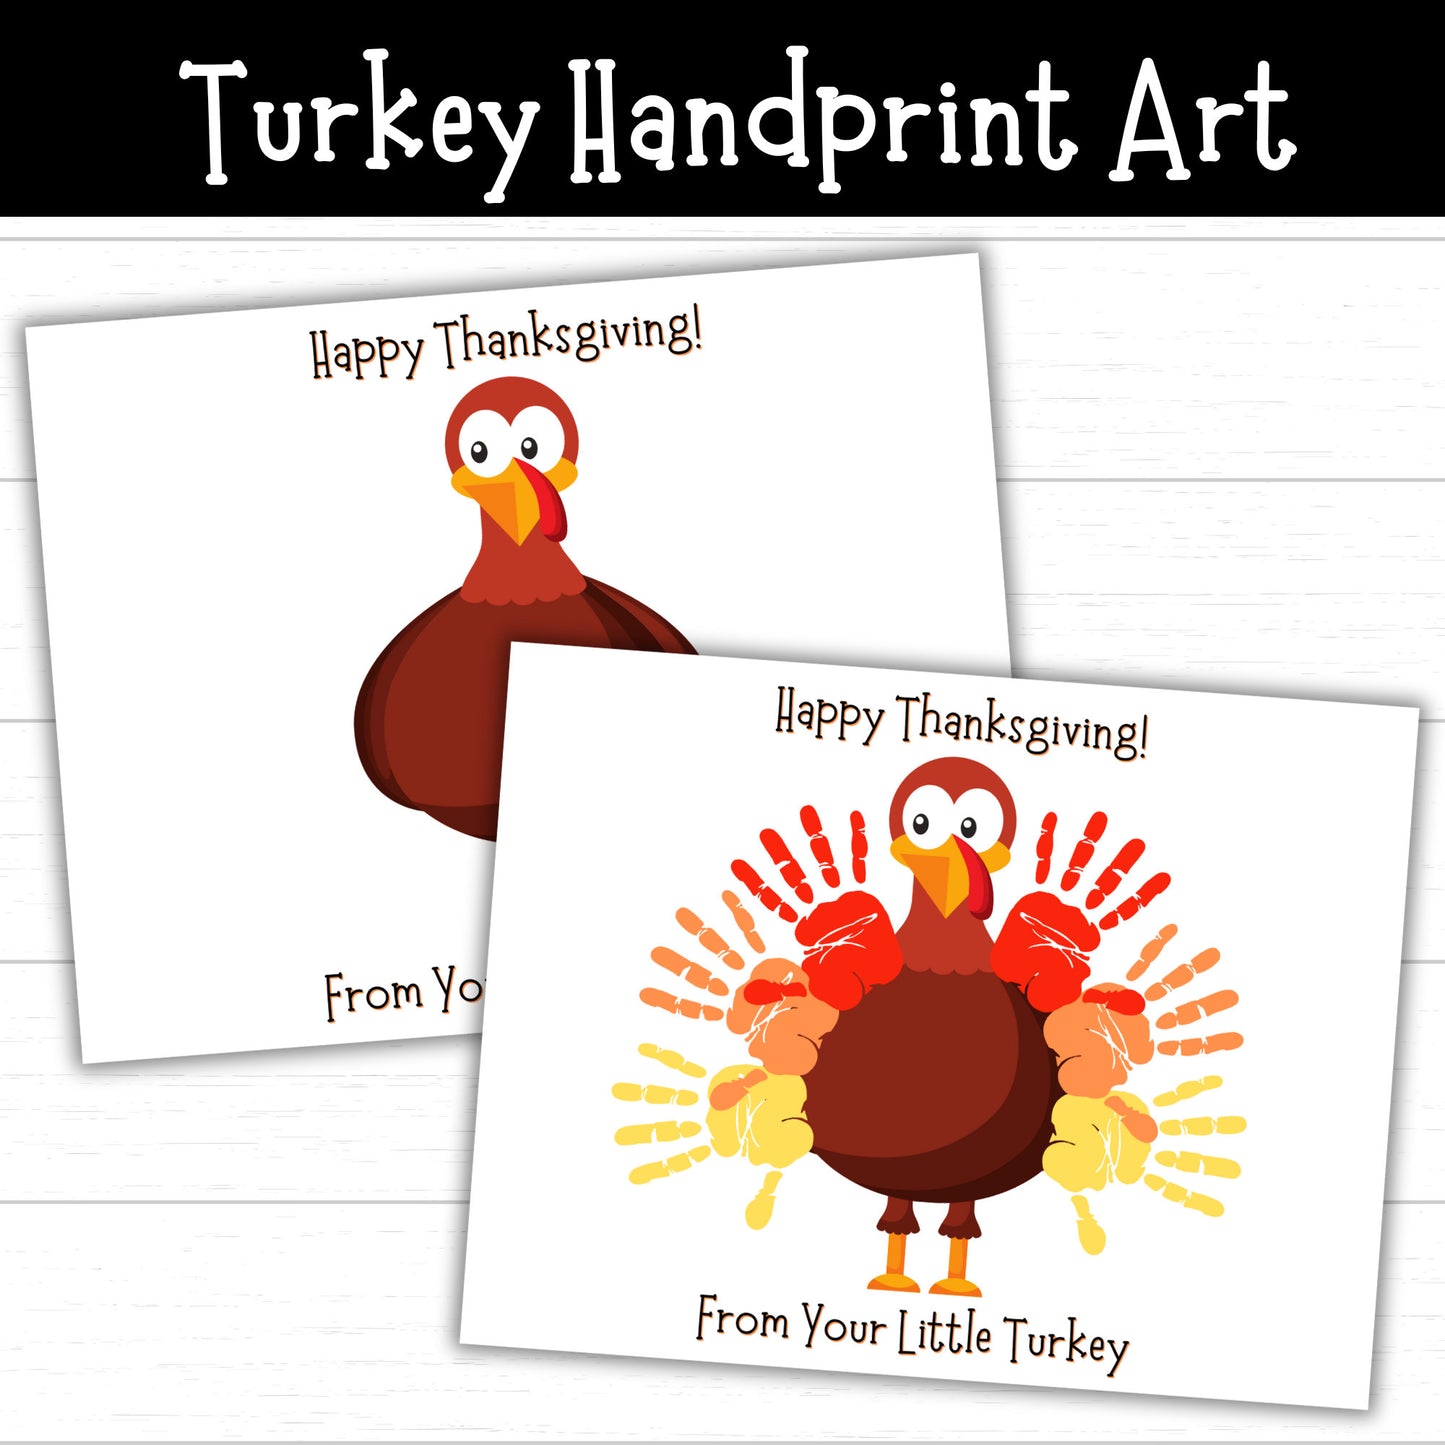 Turkey Handprint Art, Thanksgiving Handprint Art, Turkey Activity for Kids, Turkey Crafts for Kids, Printable Turkey Craft, Thanksgiving